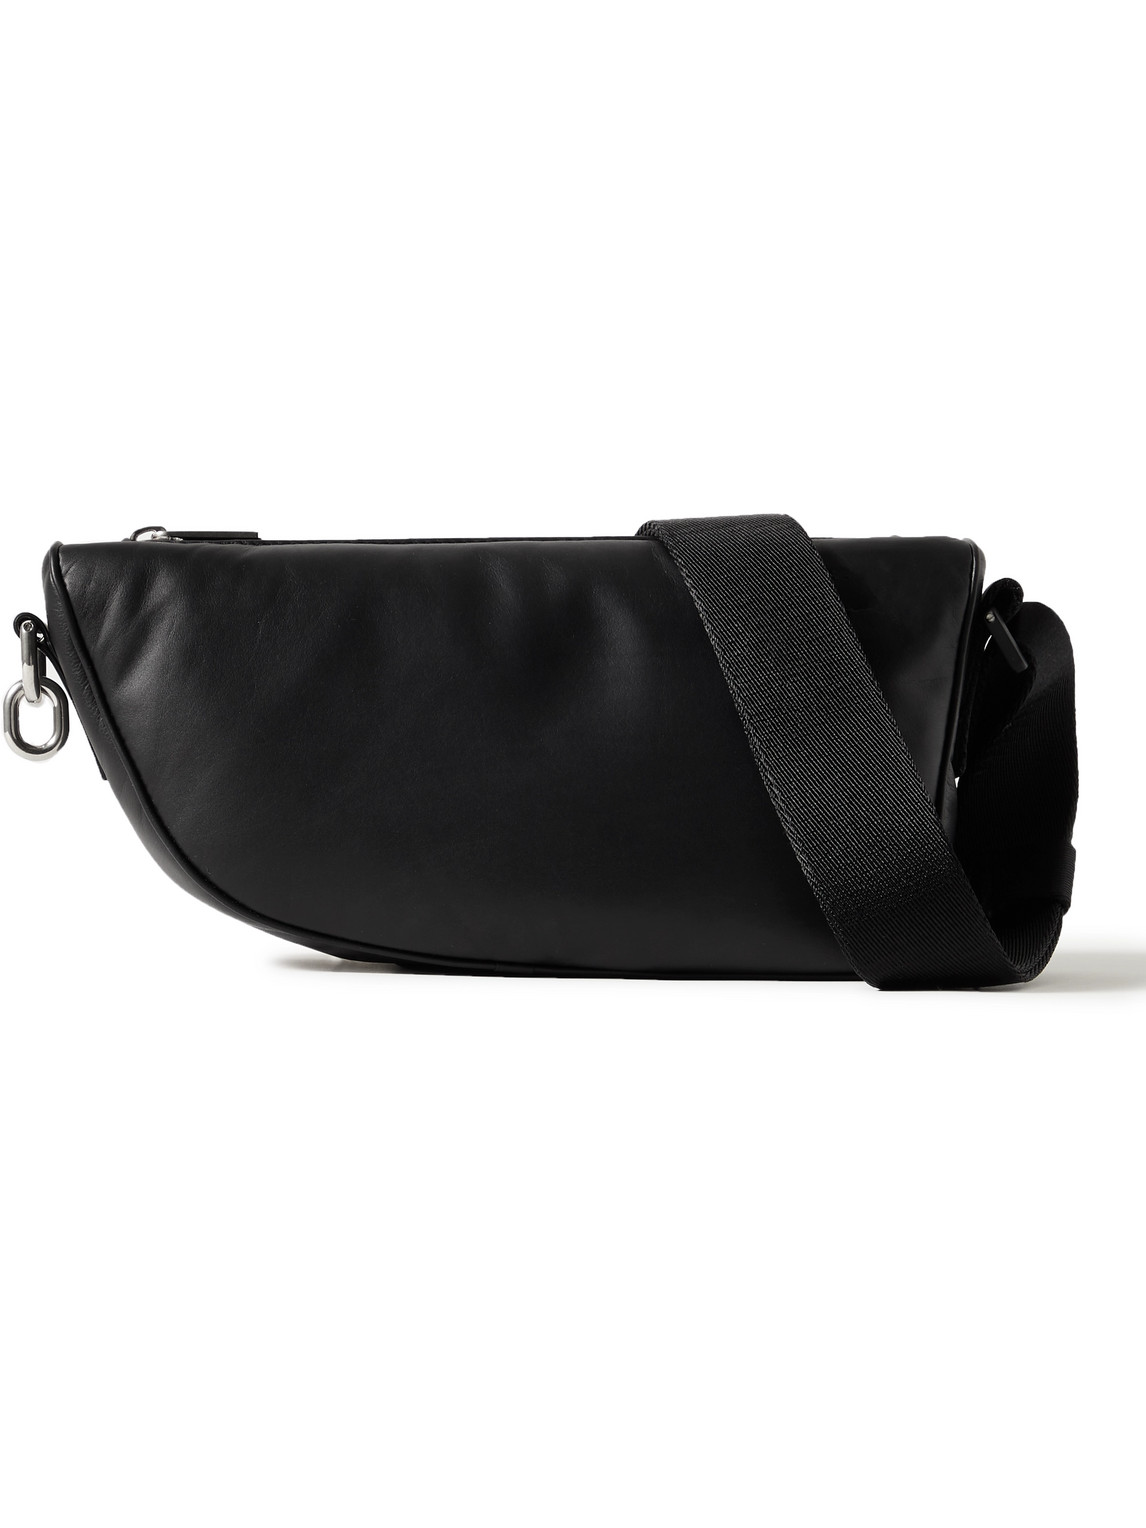 Burberry Padded Leather Messenger Bag In Black